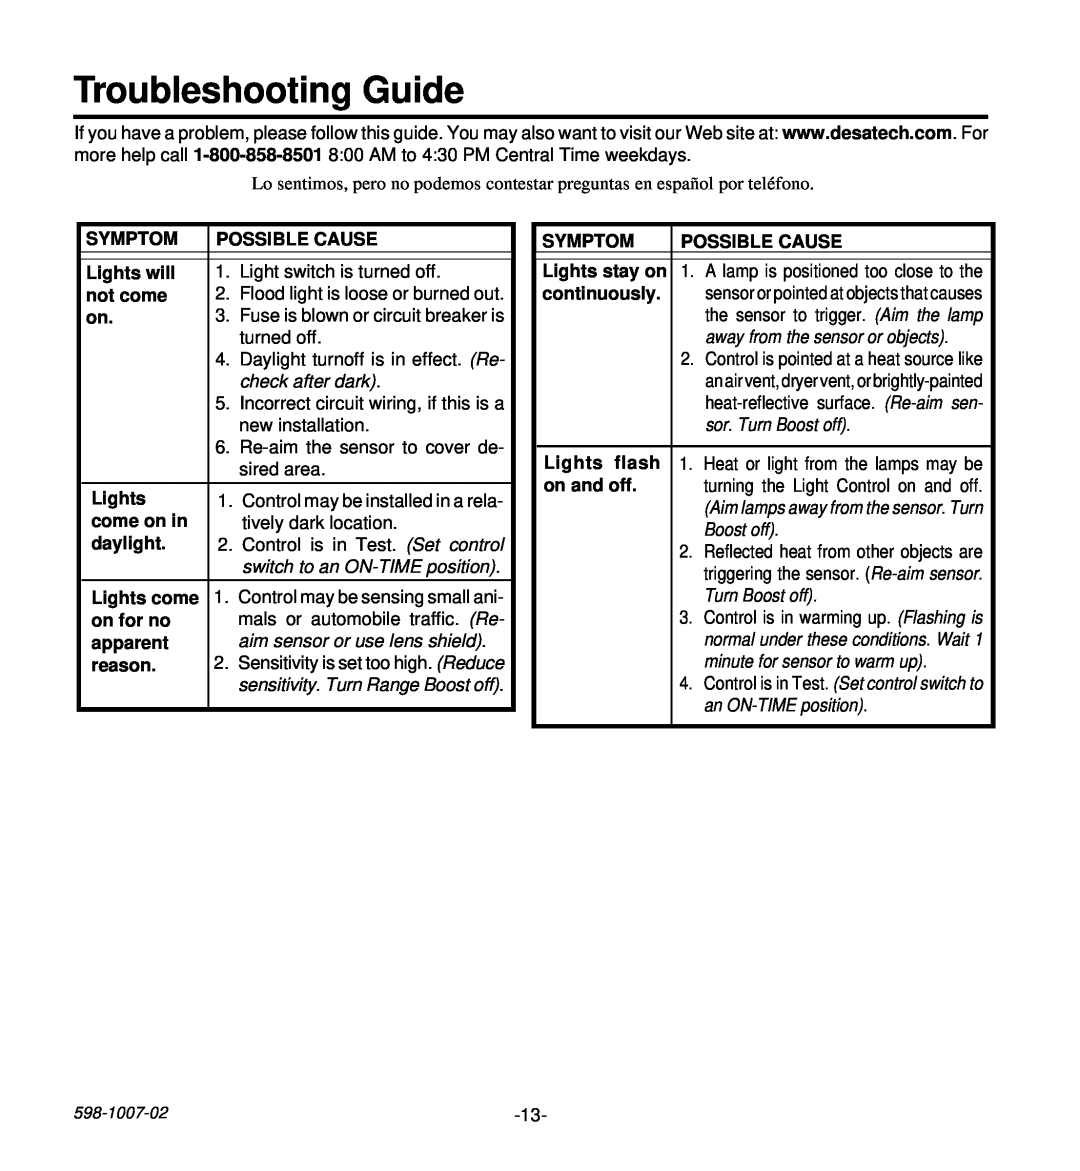 Desa HD-9260 manual Troubleshooting Guide 